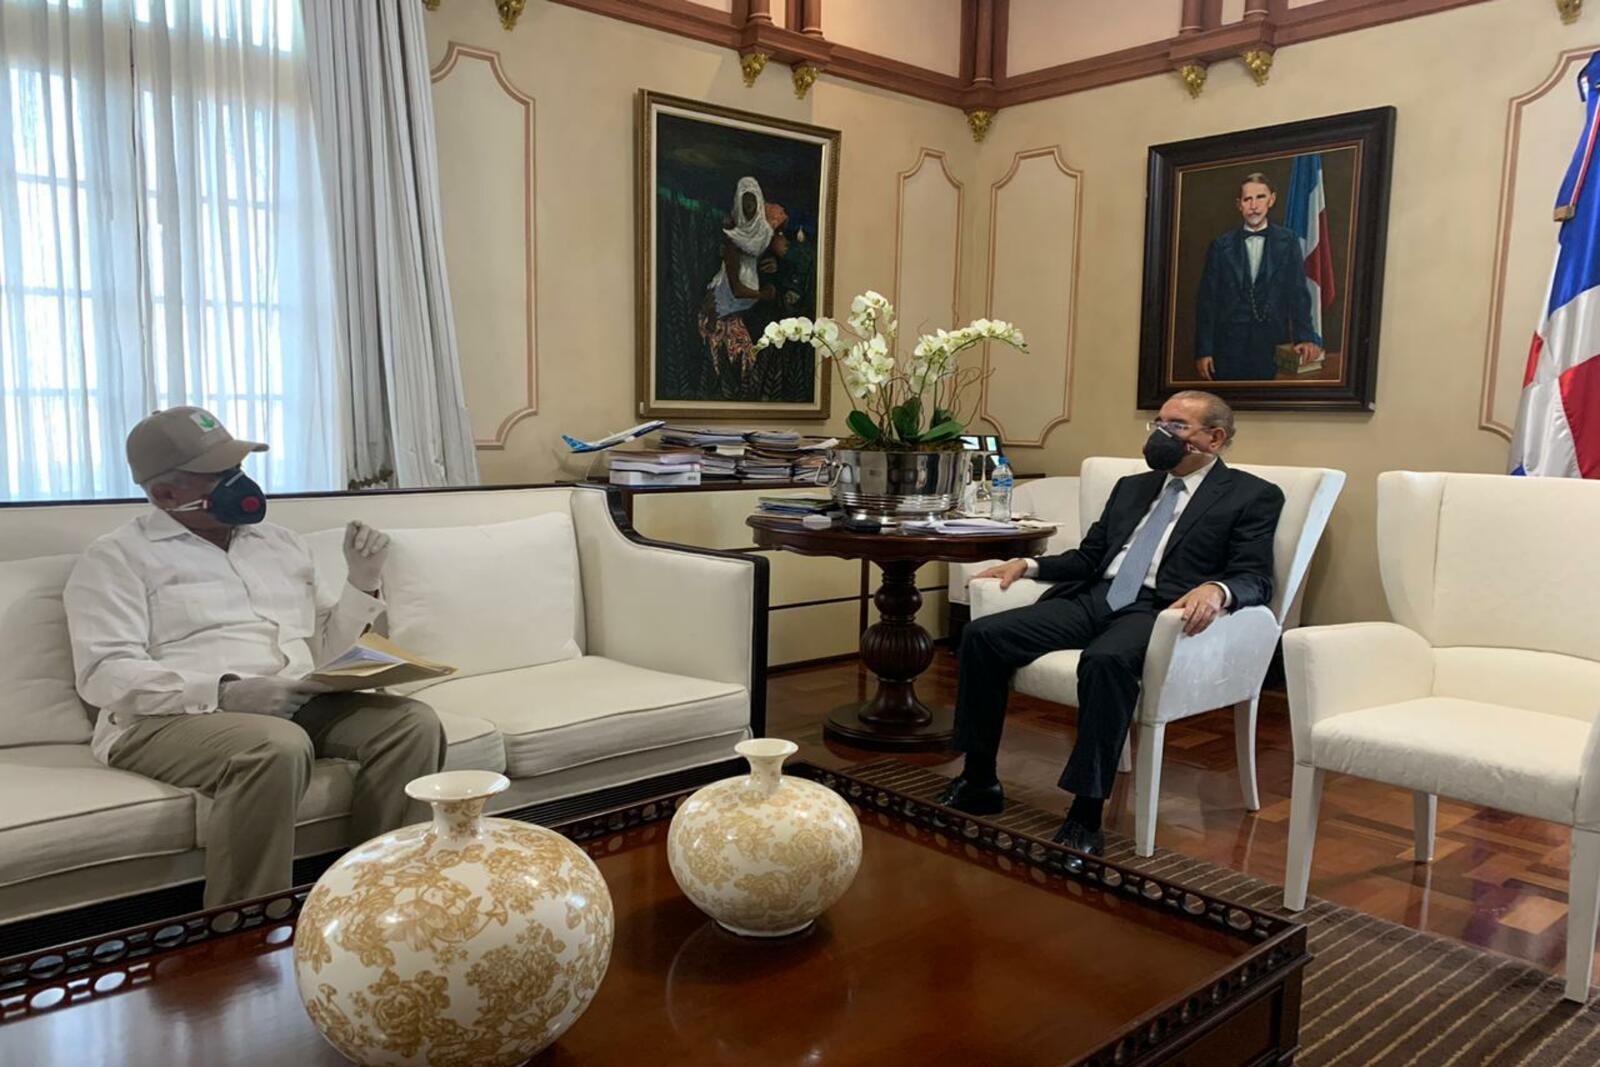 REPÚBLICA DOMINICANA: Tras presentar informe semanal a Danilo Medina, Osmar Benítez anuncia cosecha récord arroz en RD para mayo: más de 8 millones de quintales